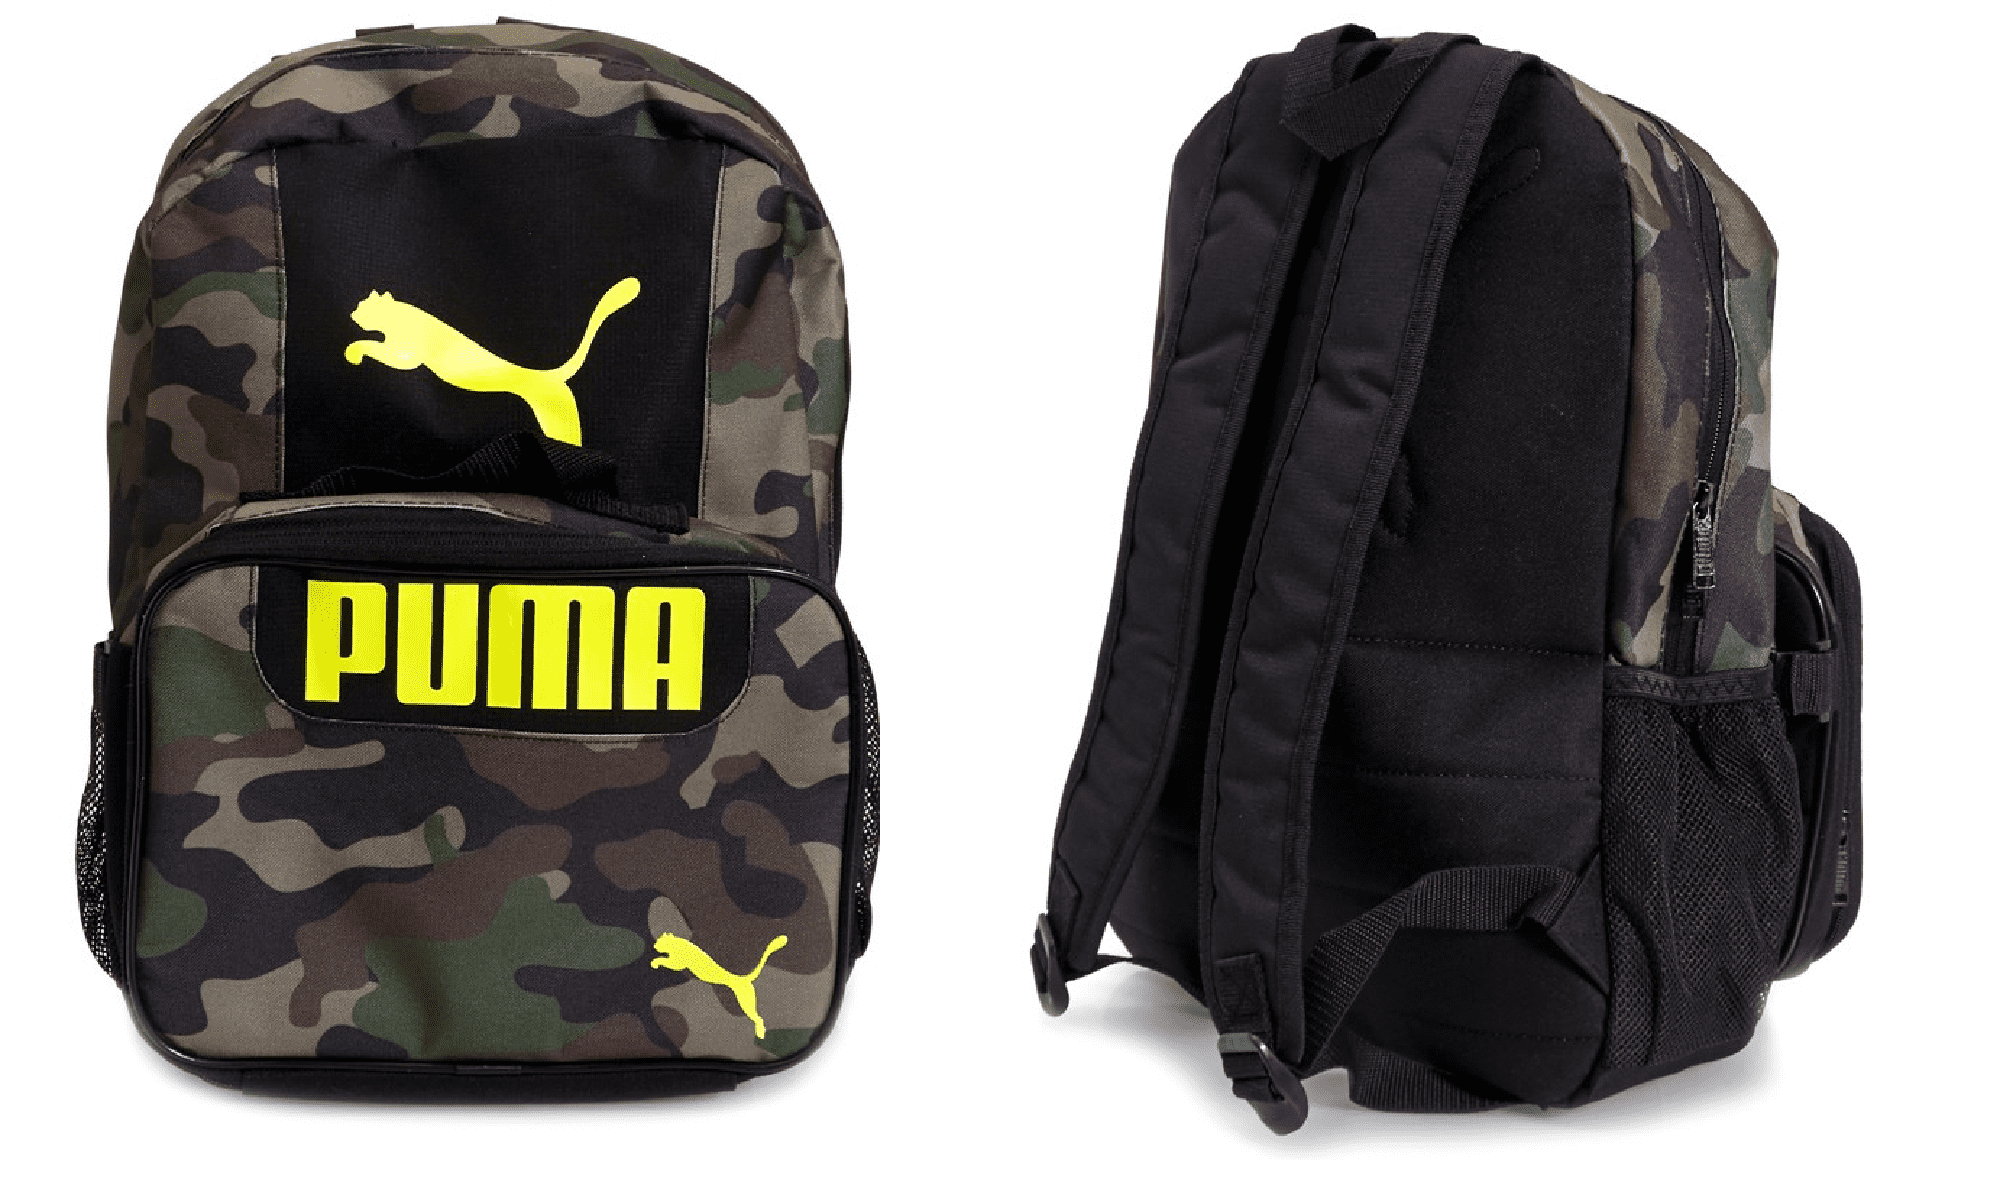 puma backpack for boys